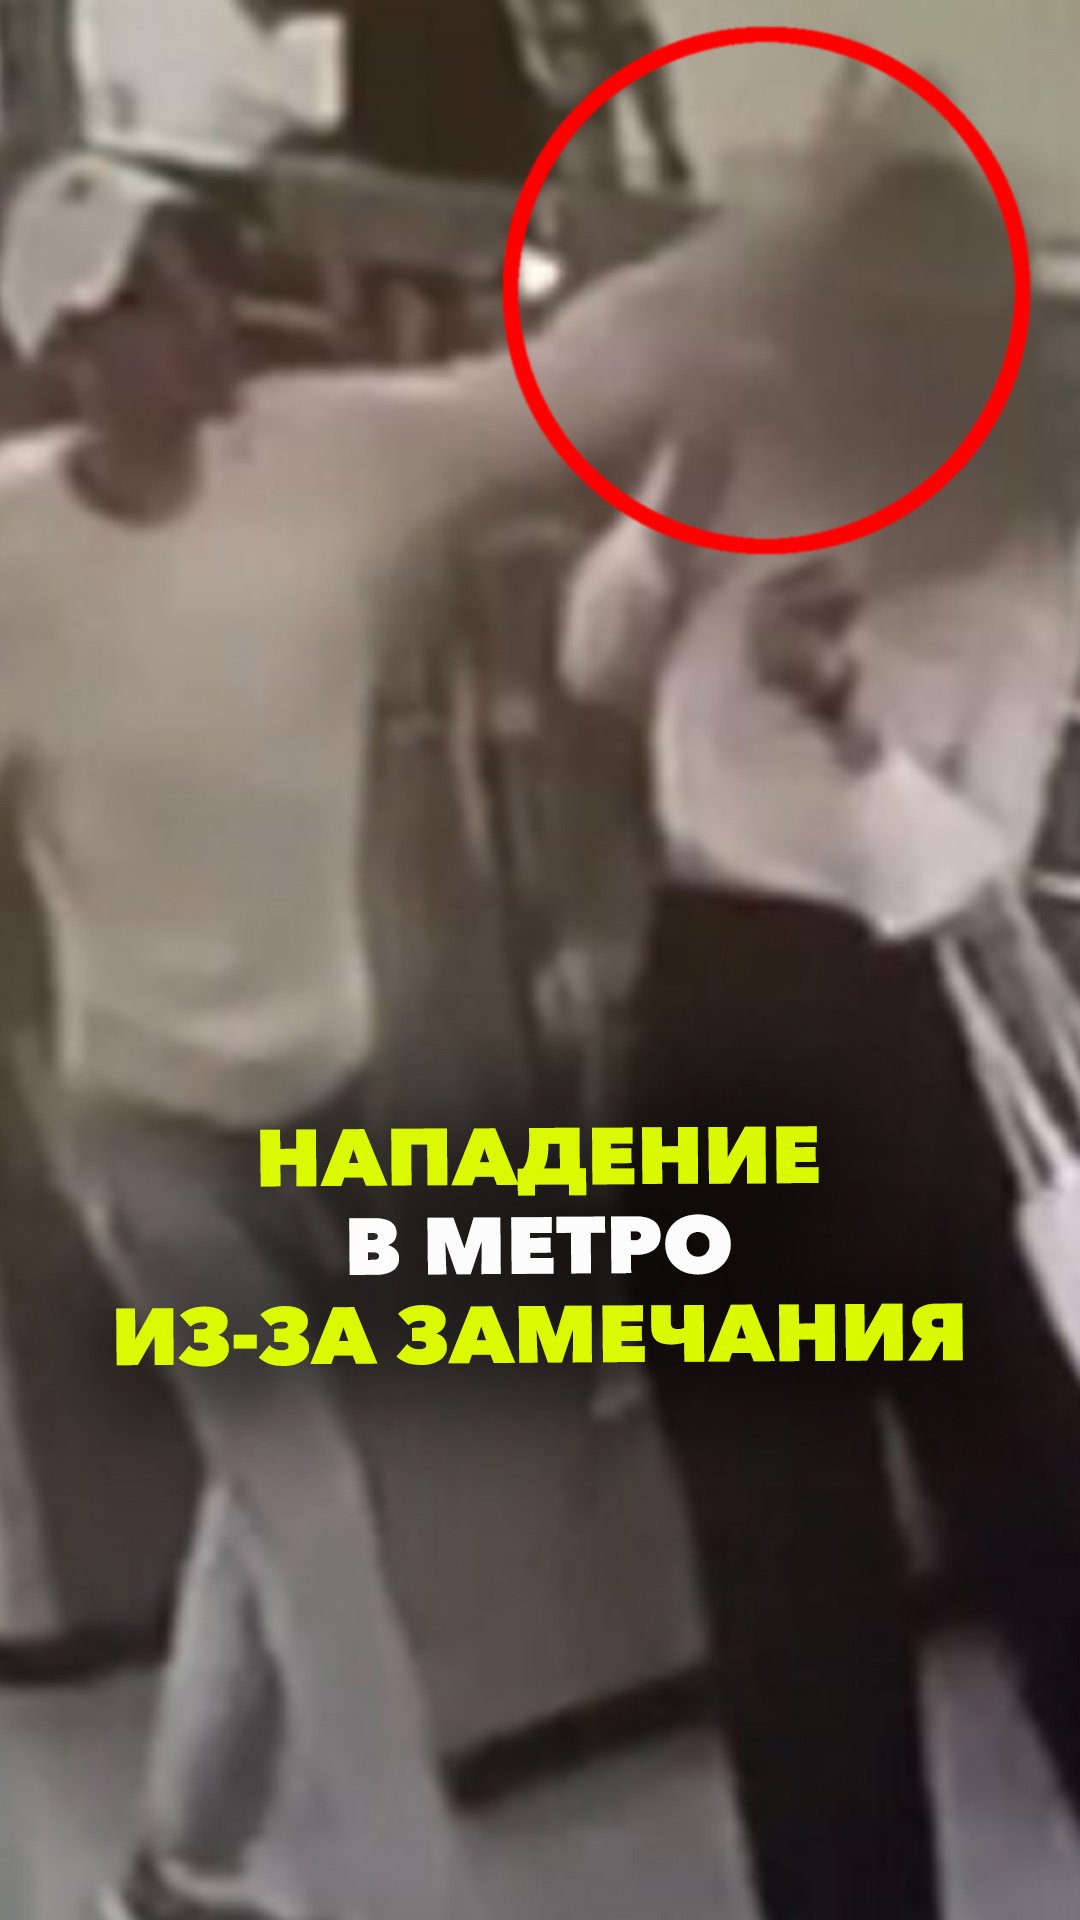 Безбилетник напал на девушку в метро из-за замечания - хотел проскочить турникет вместе с ней